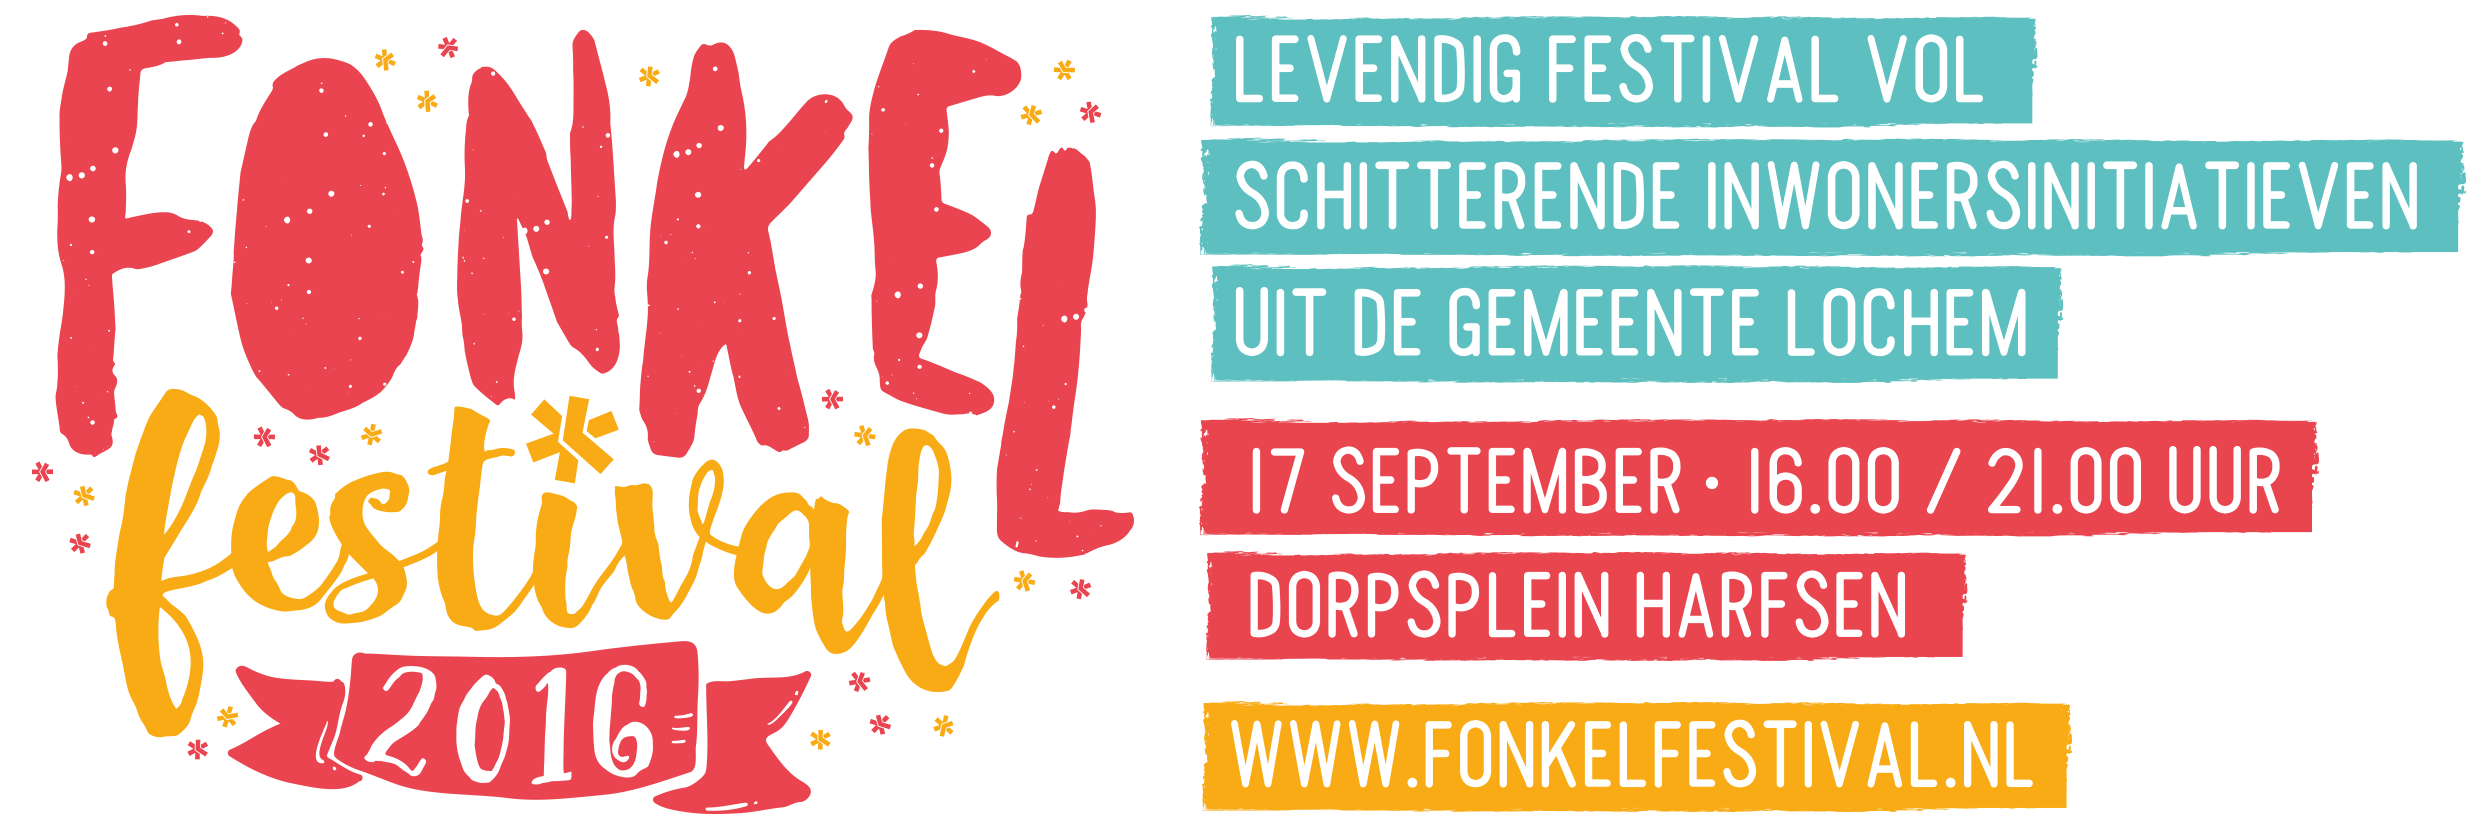 p1 logo Fonkelfestival